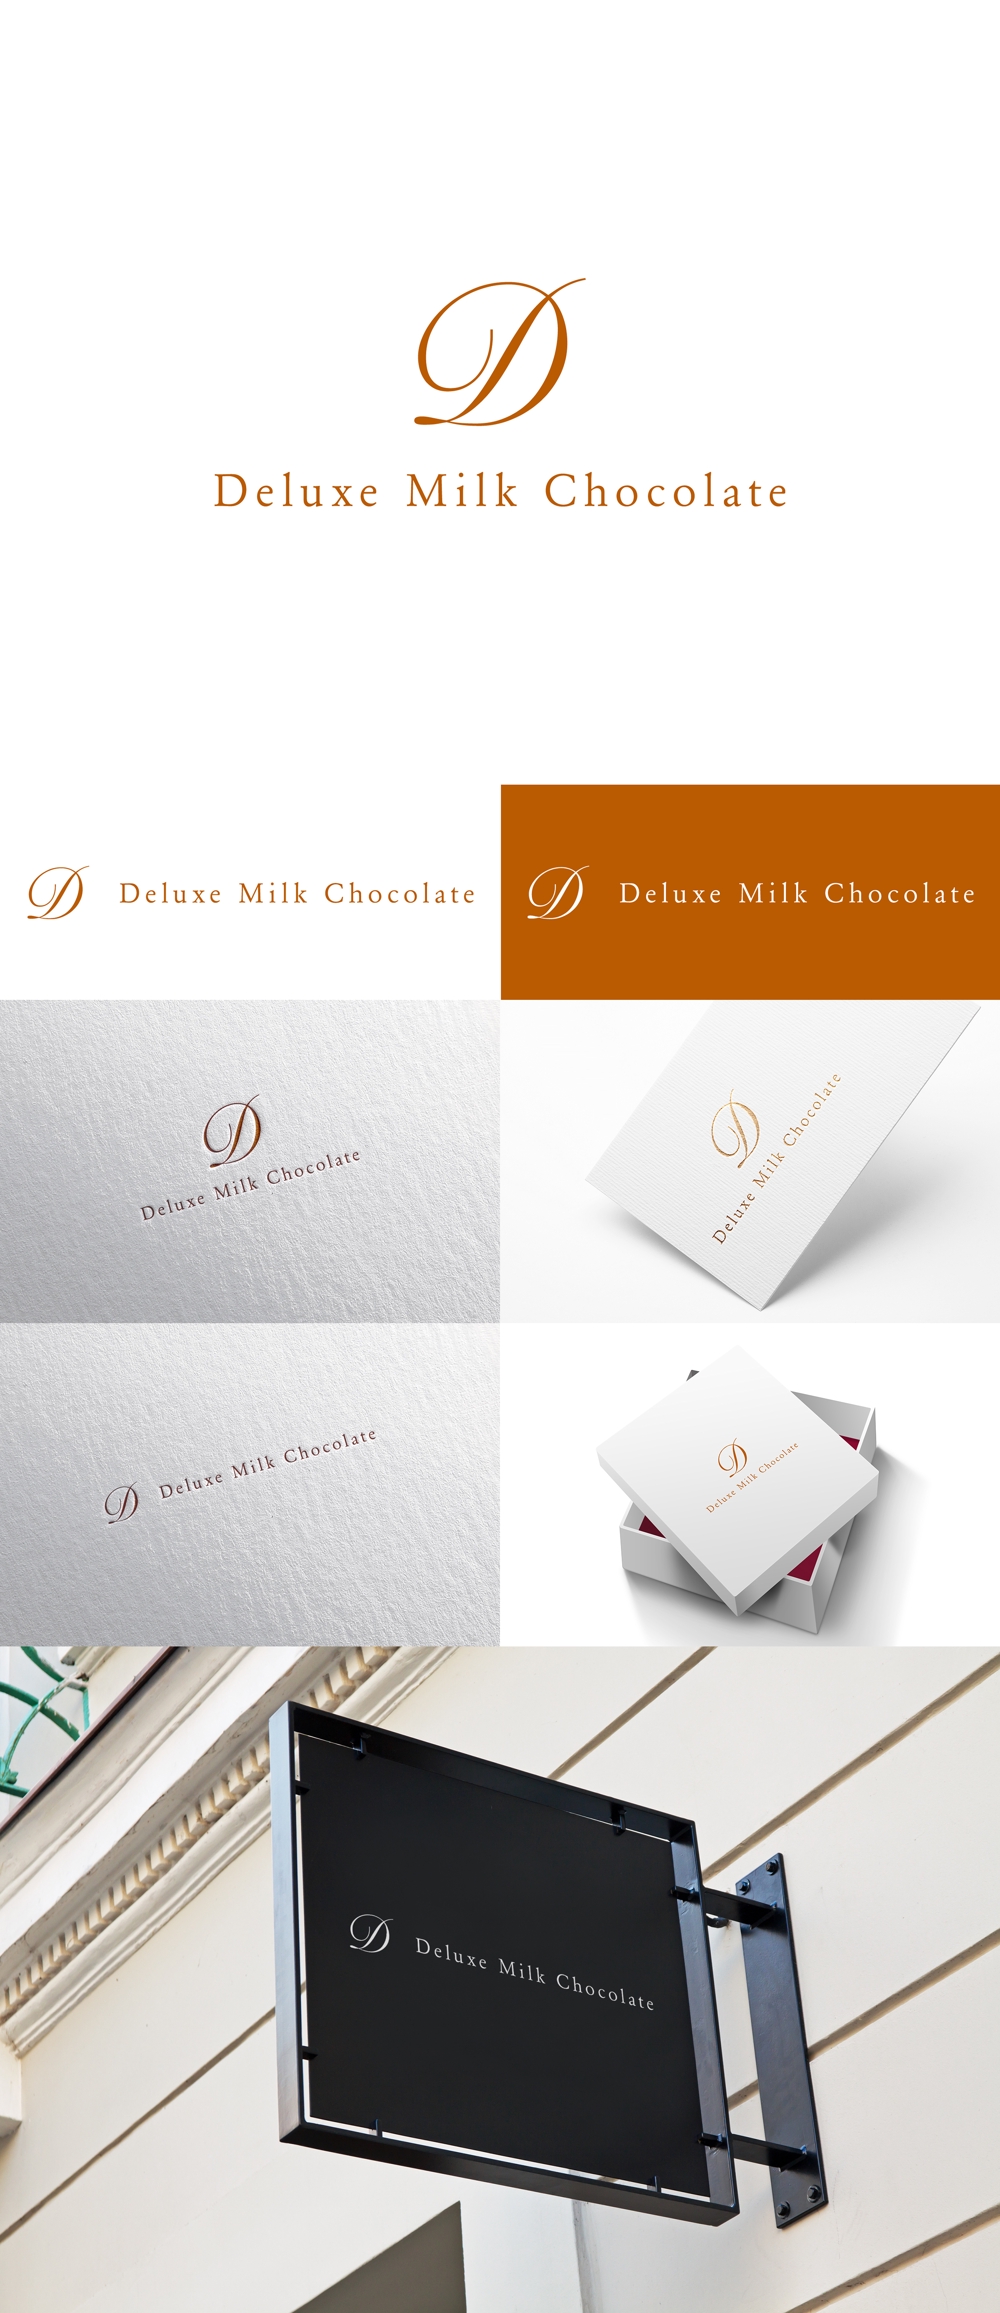 Deluxe-Milk-Chocolateさま2.jpg